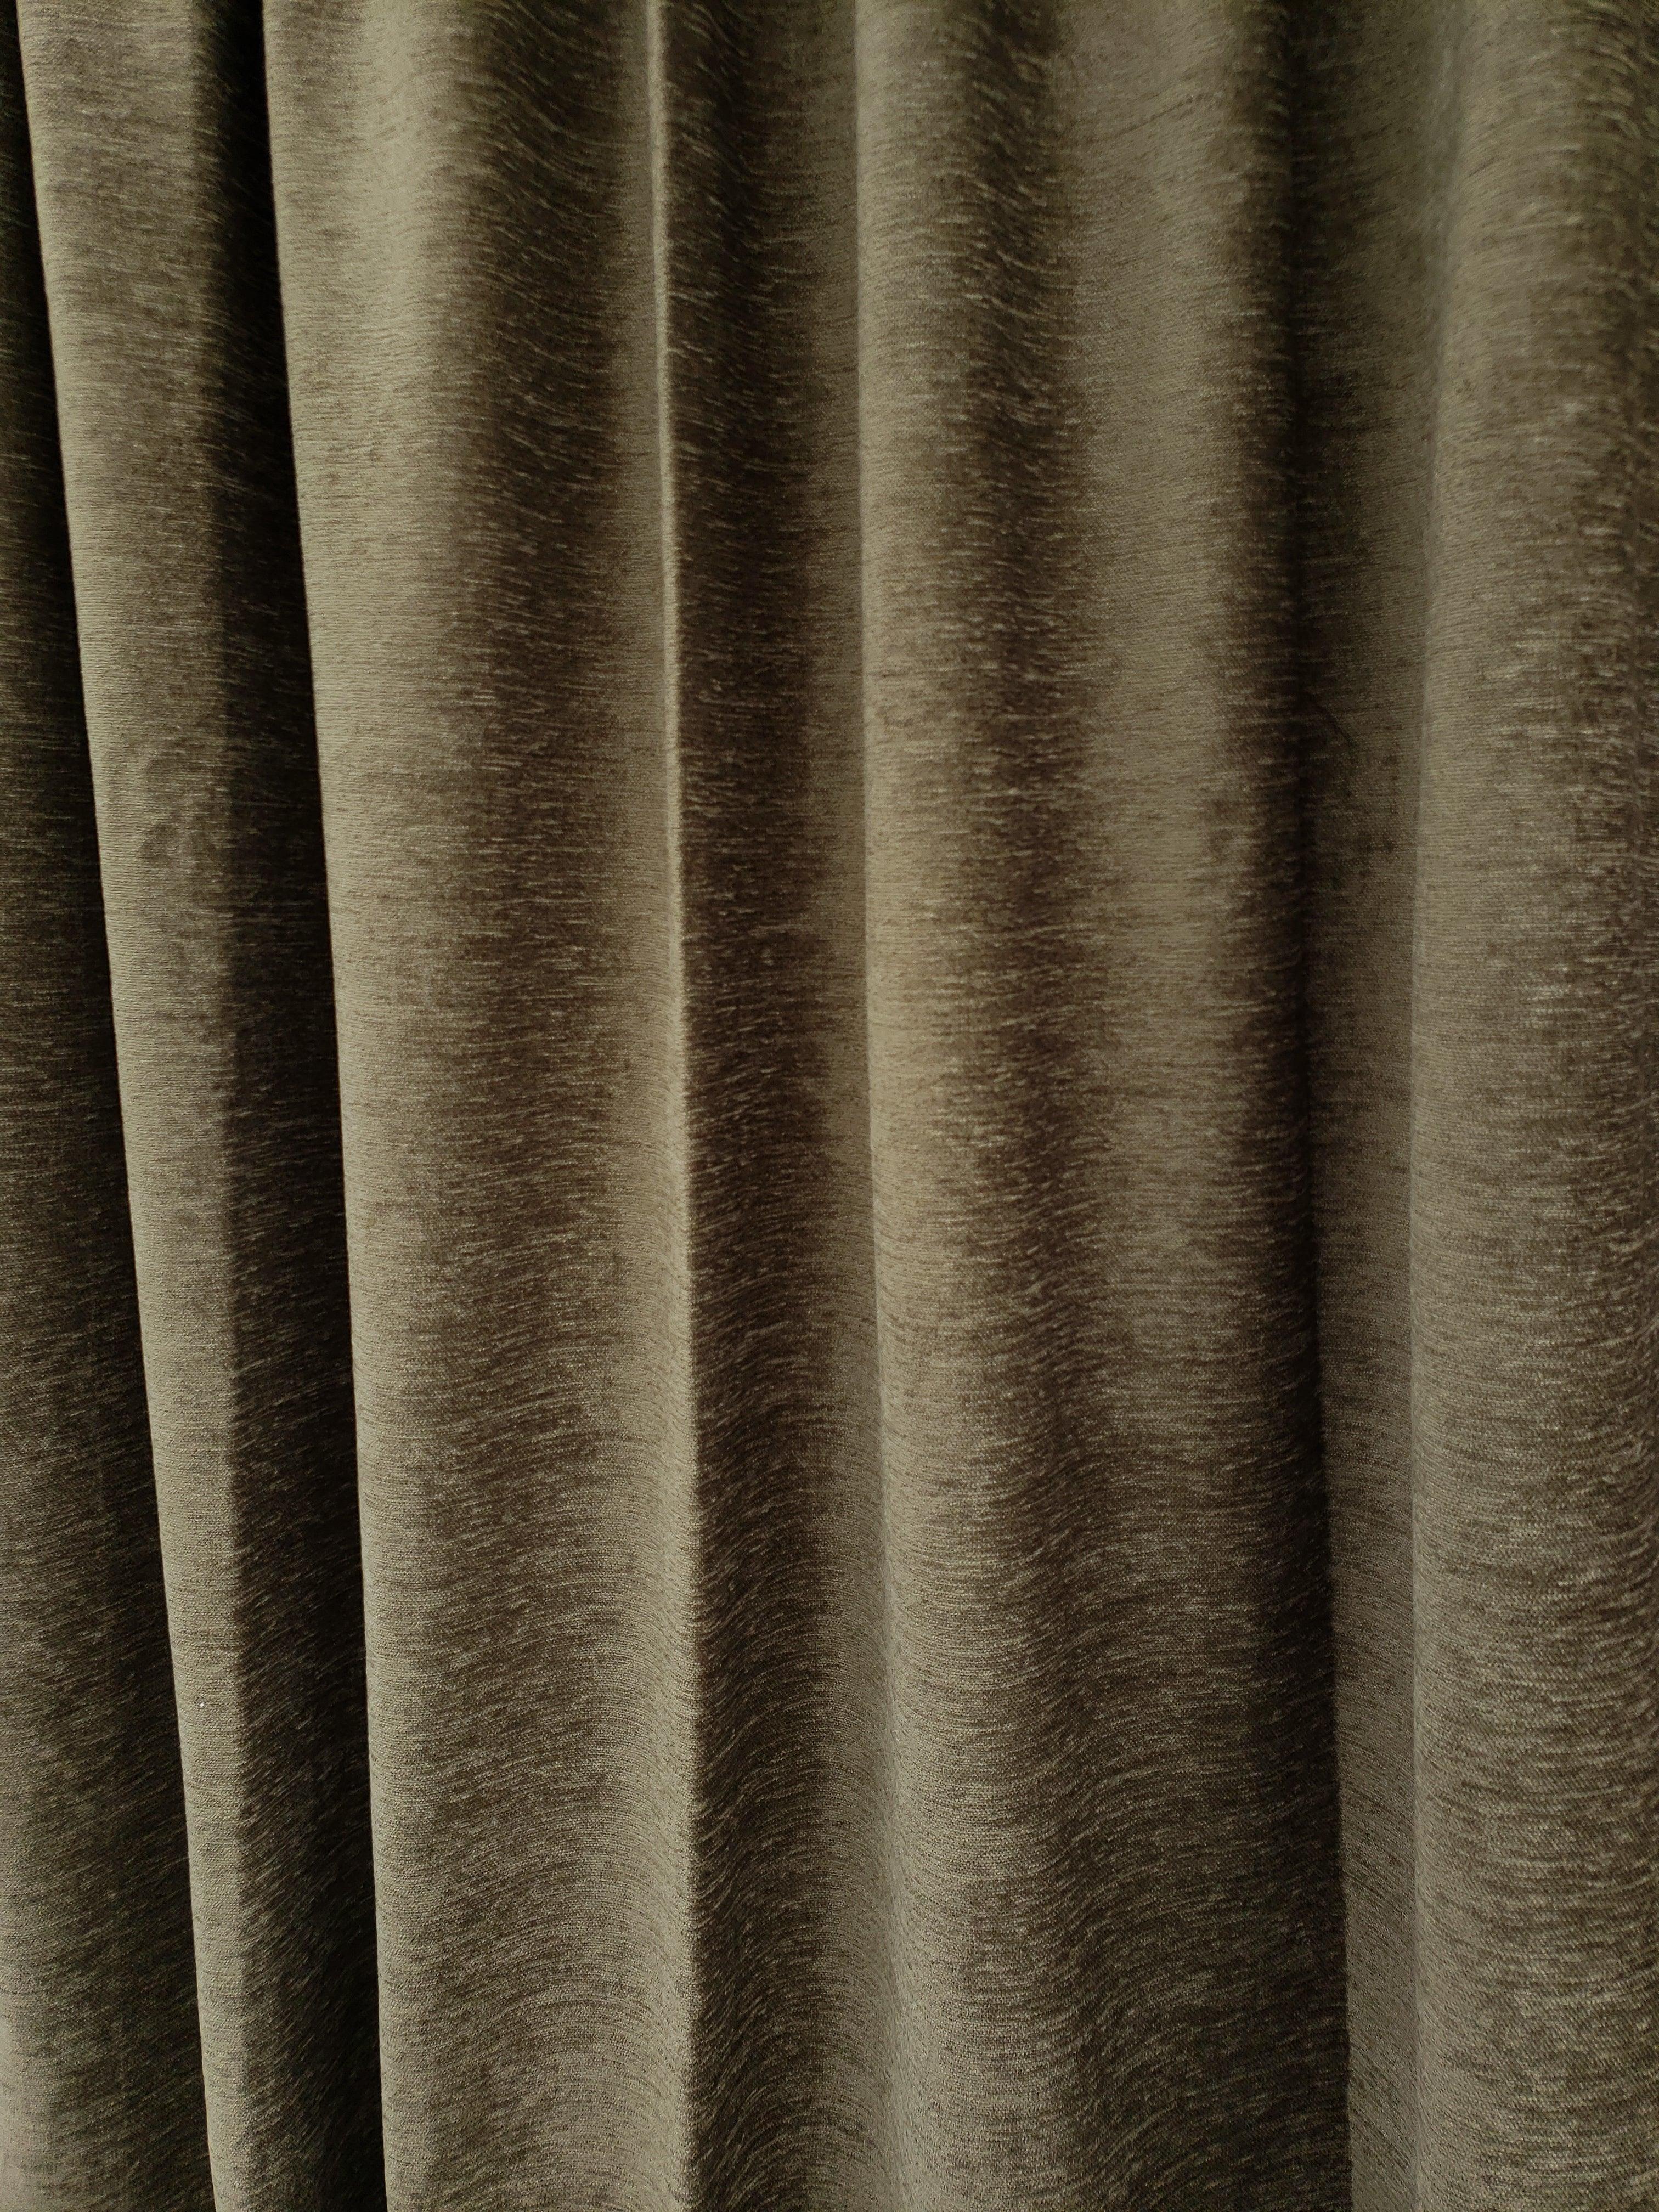 Fire Retardant 100% Polyester Flame Retardant Fabric for Curtain